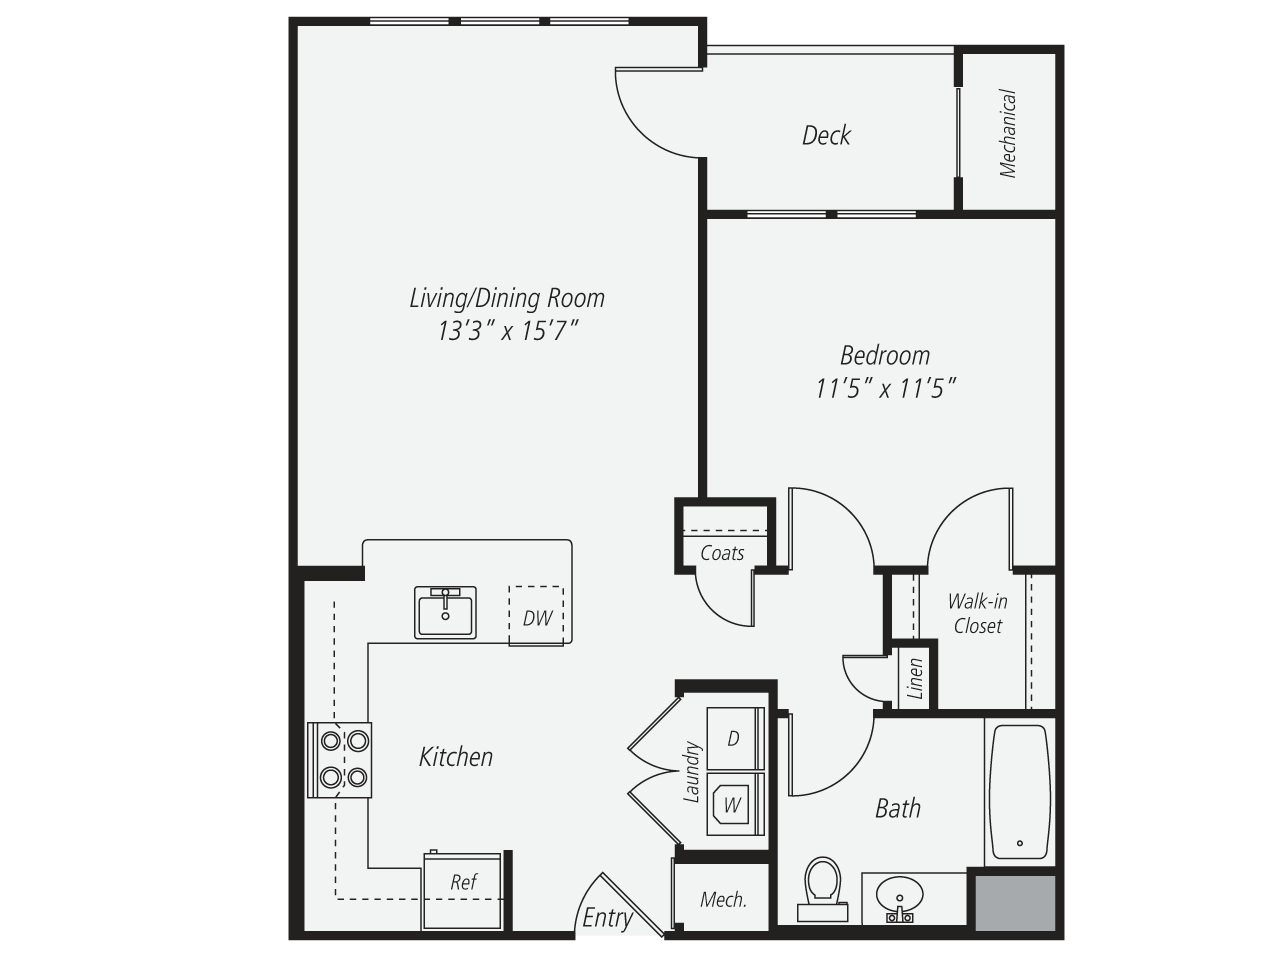 Floorplan for Apartment #212, 1 bedroom unit at Halstead Norwalk